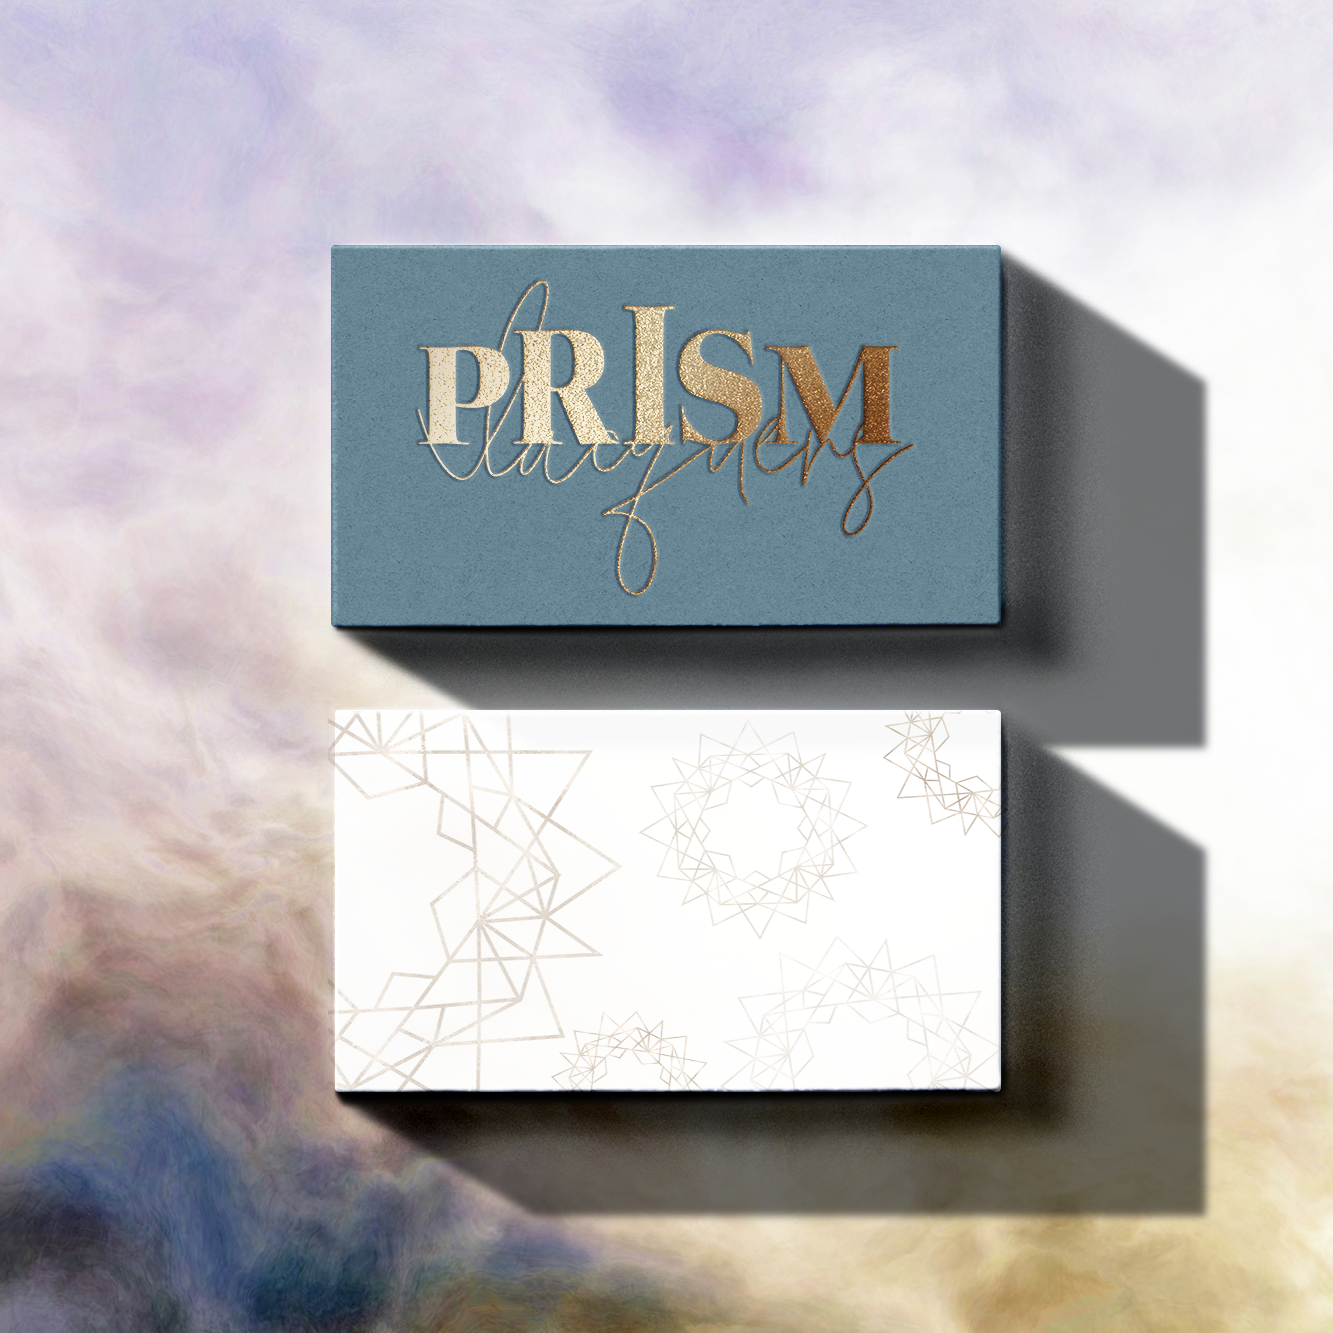 Prism_Mikado Business Card Mockup Template.png